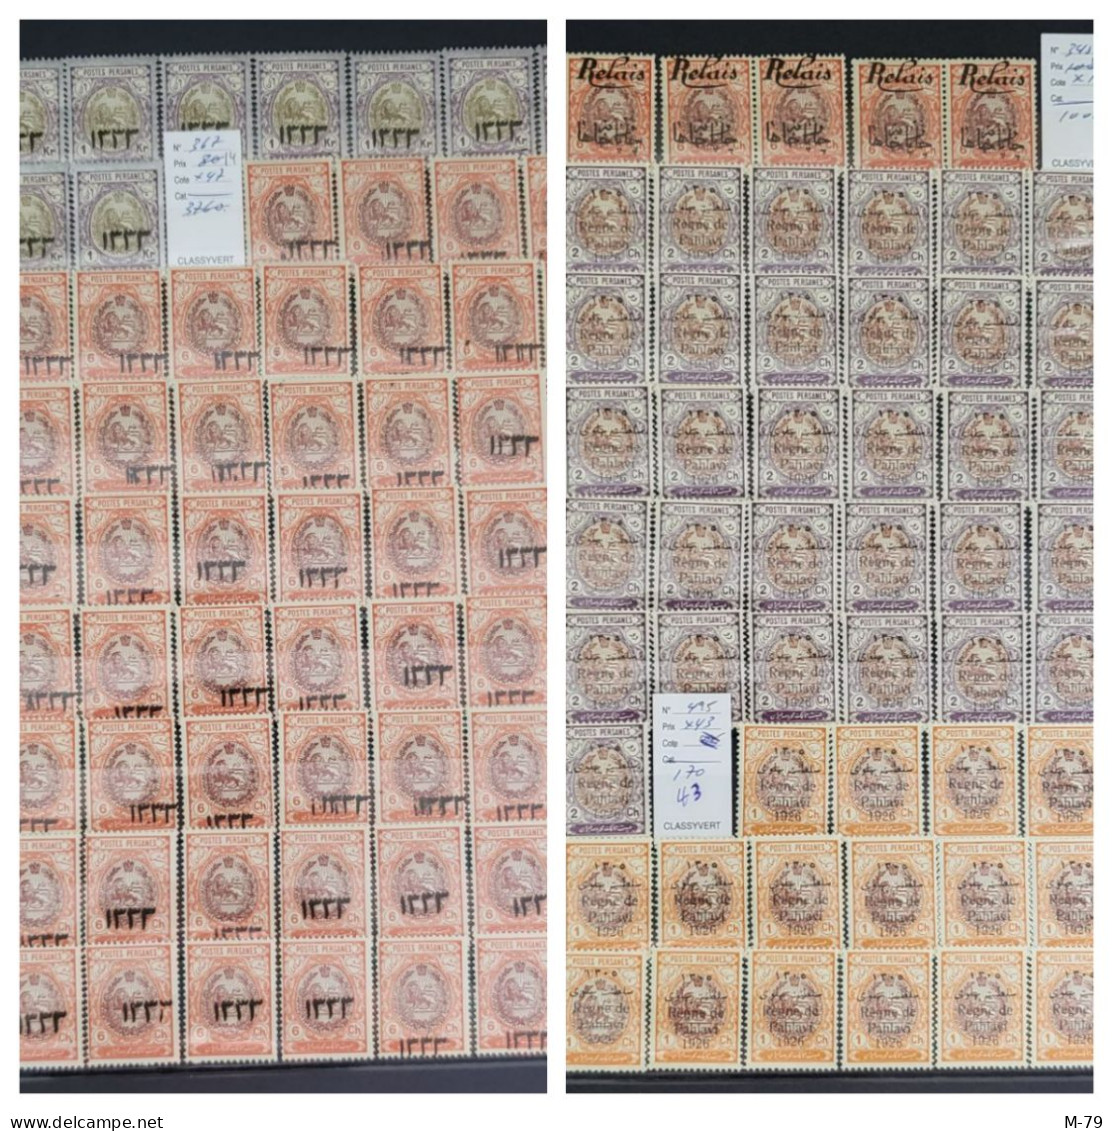 Iran/Persia - Qajar Mix Stamps BIG BIG Collection MNH - Used  More Than 3000 Stamps + Album - Irán